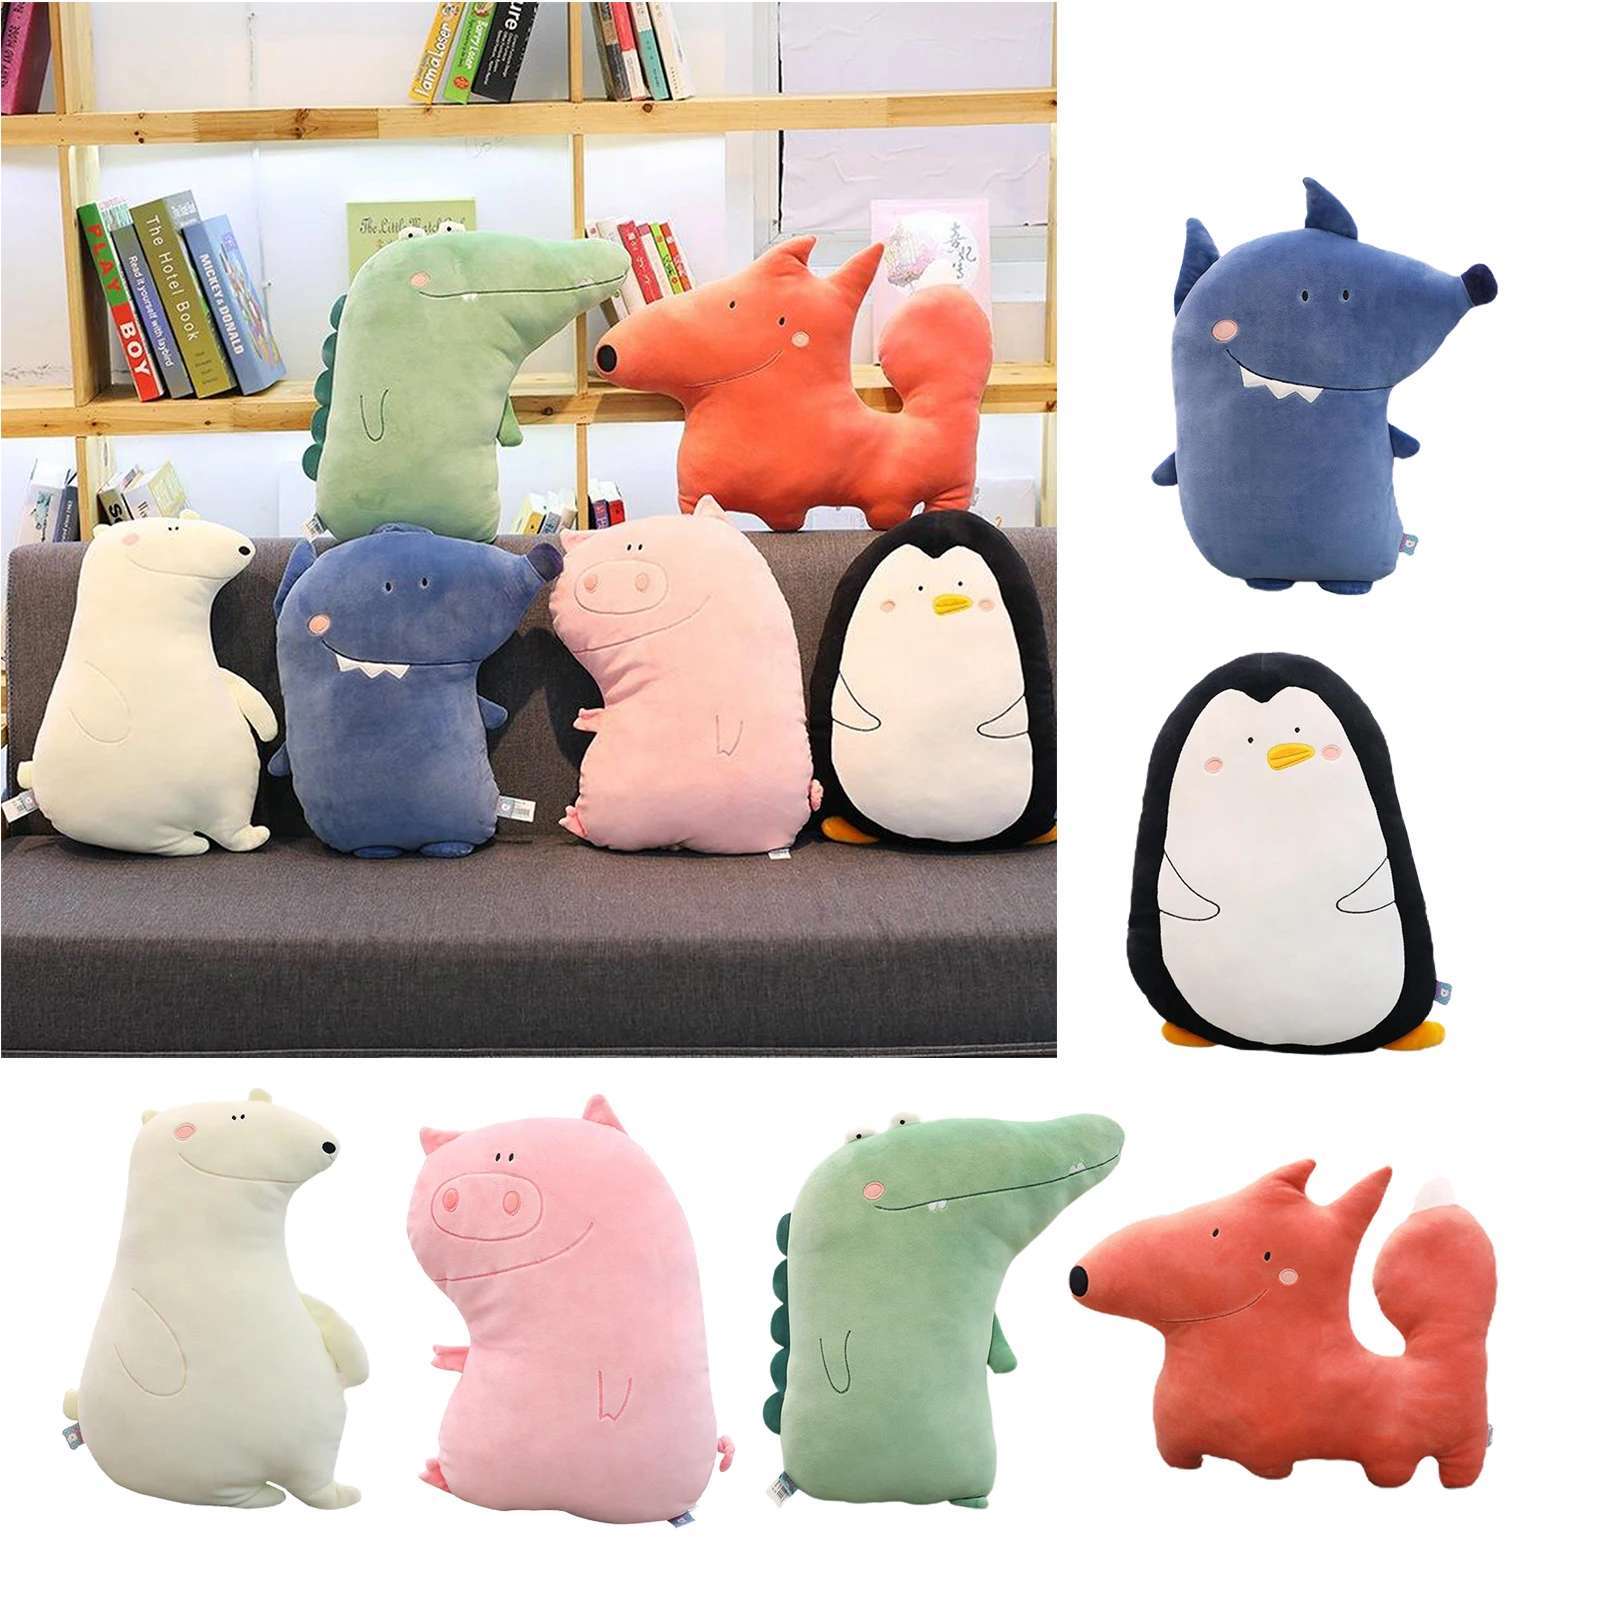 

Chubby Cartoon Pillow Soft Fat Hugging Pillow Stuffed Plush Animal Toy Cute Pillows Xmas Kids Gift